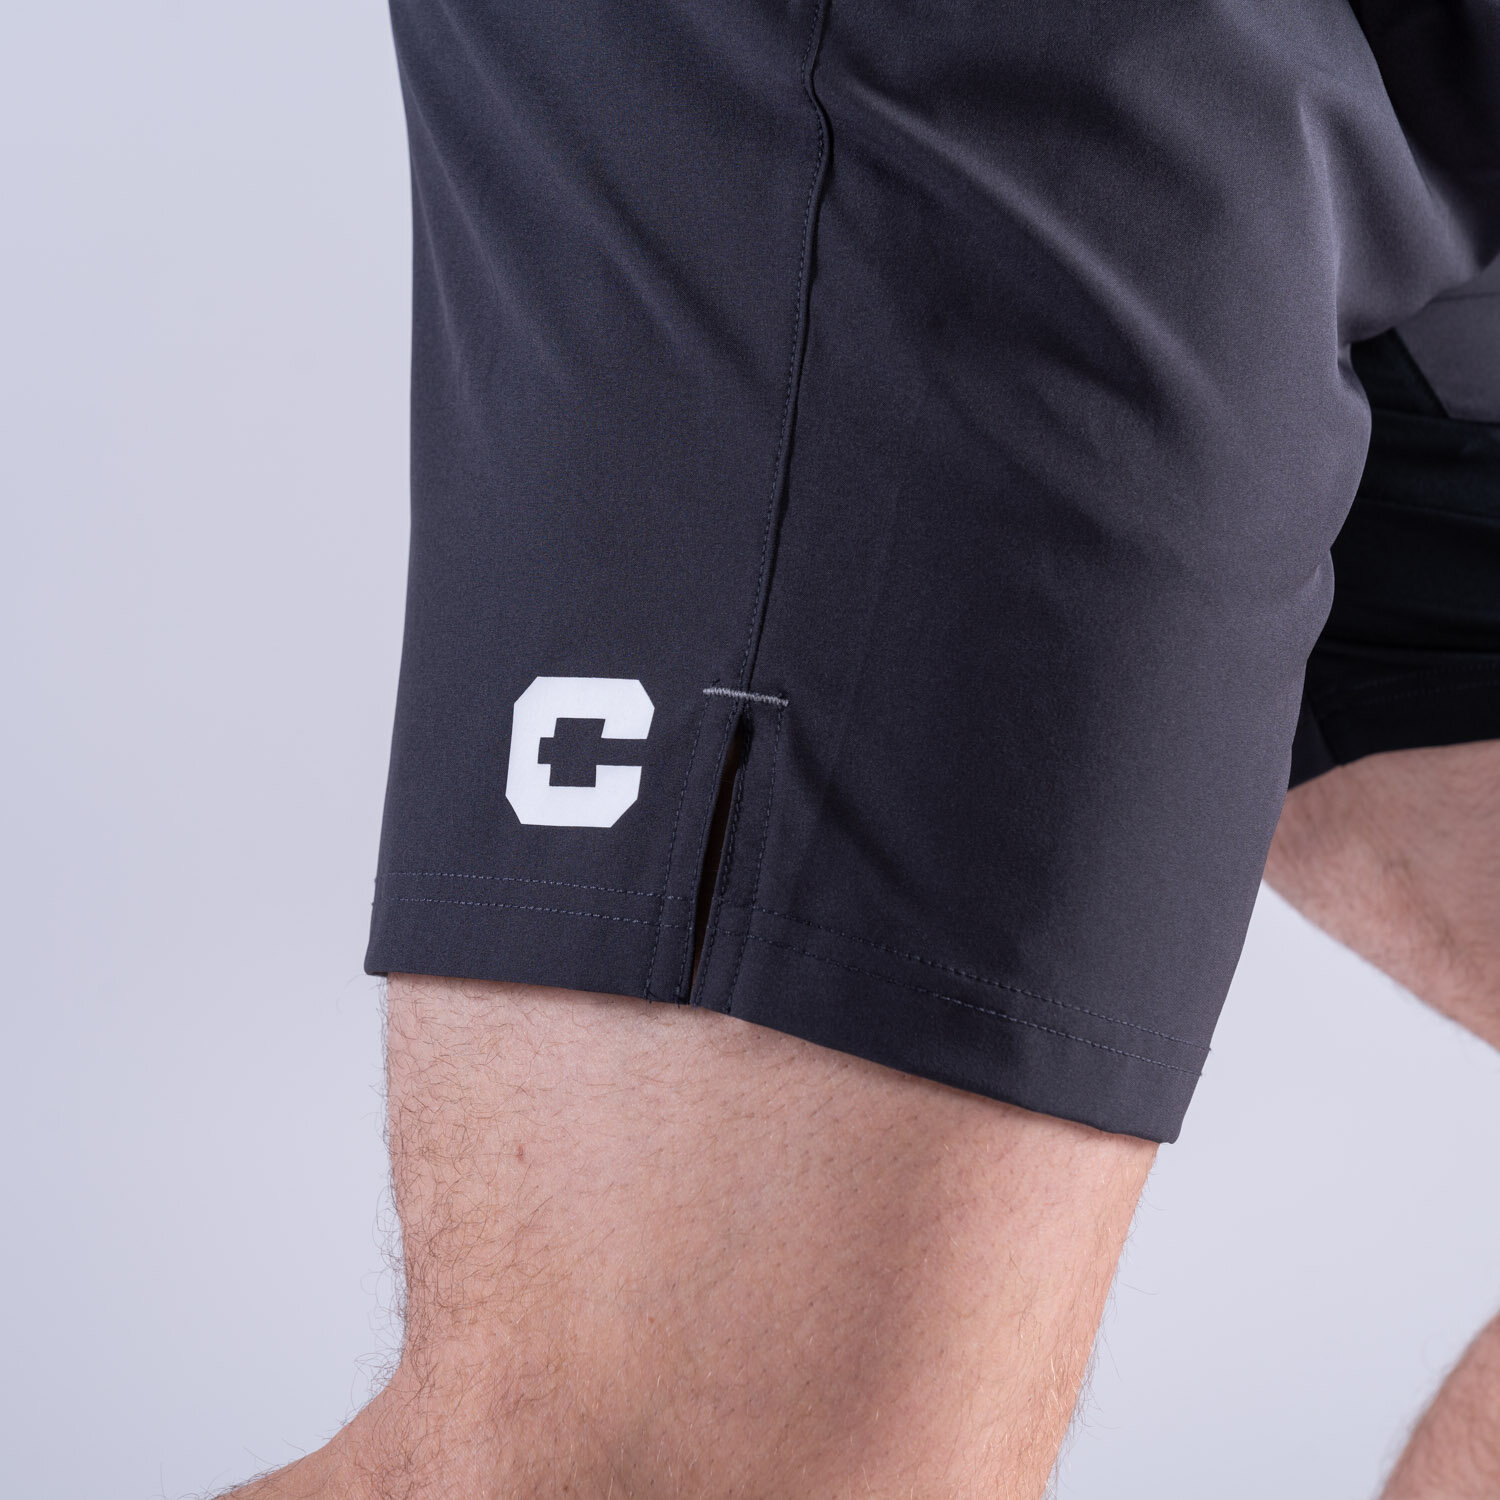 CLN Dino stretch shorts Charcoal